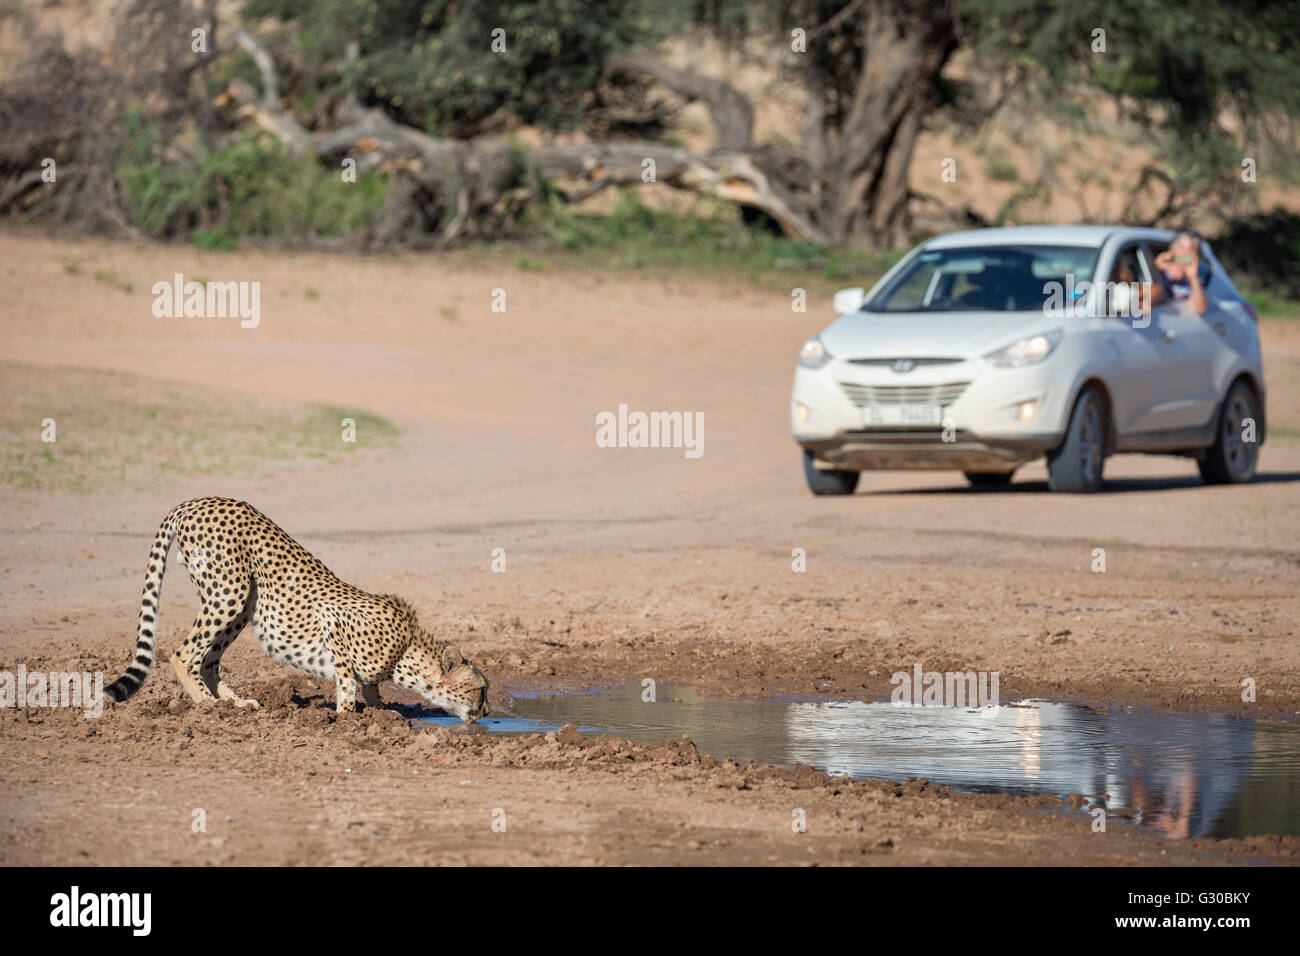 Cheetah (Acinonyx jubatus) seen on self drive safari, Kgalagadi Transfrontier Park, South Africa, Africa Stock Photo